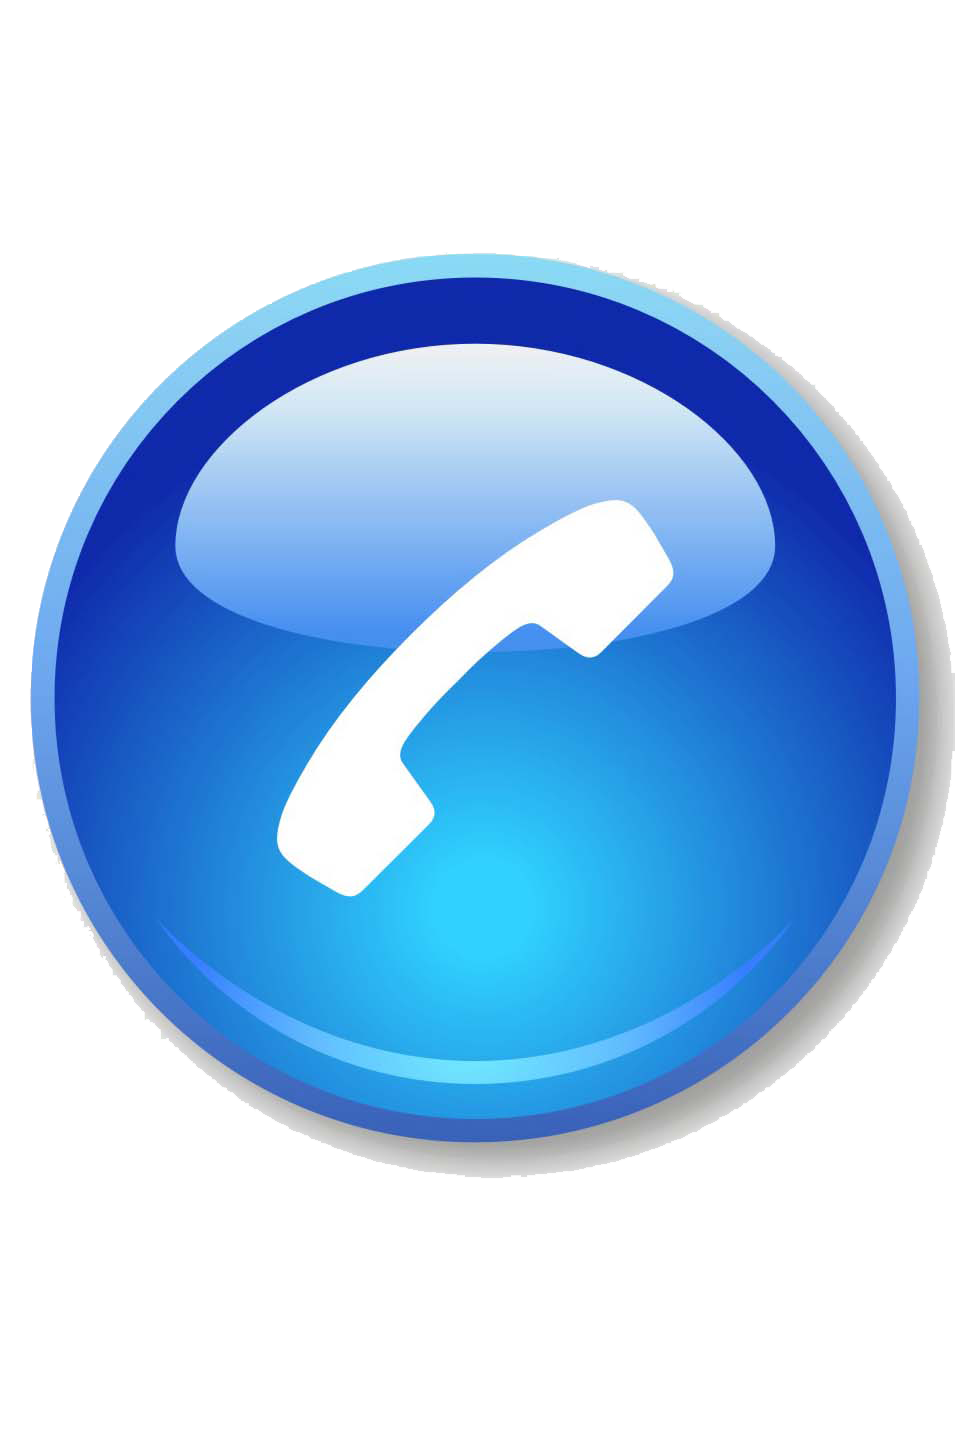 Phone clipart mobile calling. Skyfold png transparent phonepngtransparent